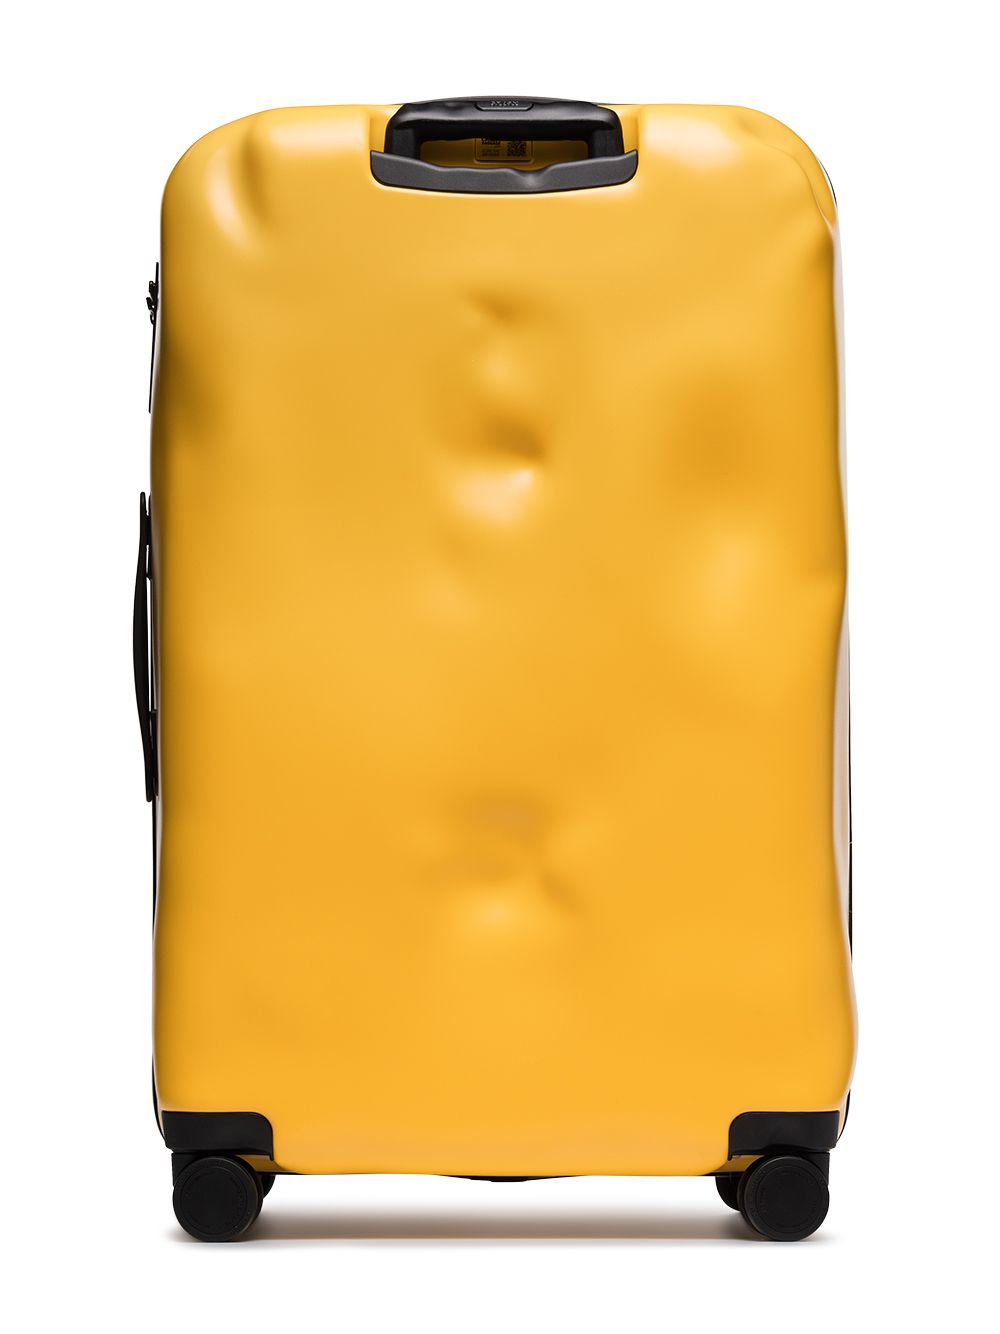 фото Crash baggage yellow icon rolling cabin bag